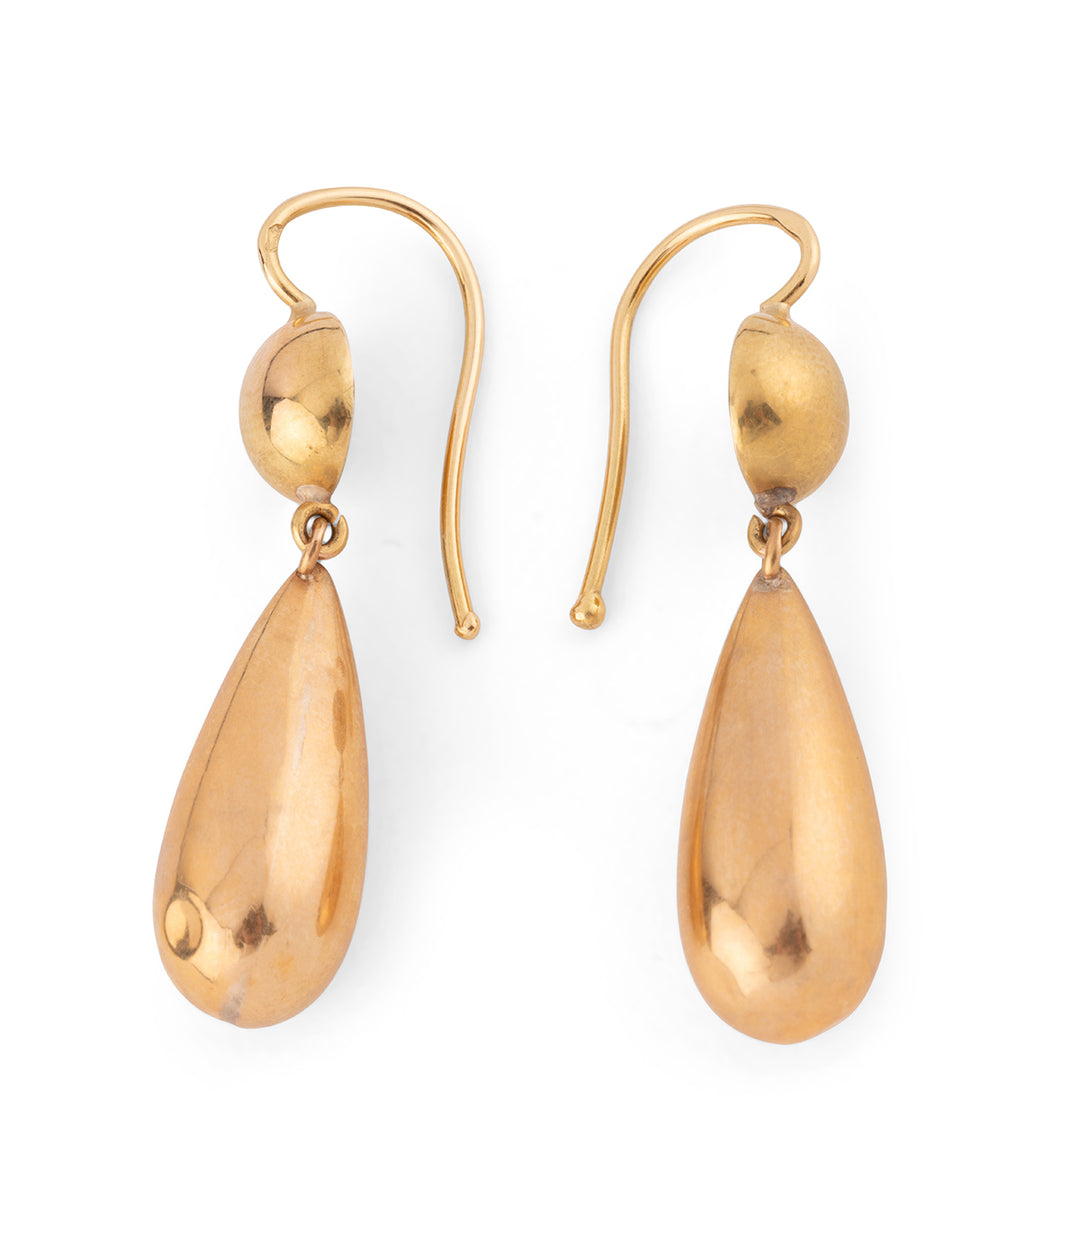 Antique gold earrings 14k "Ida" - Caillou Paris